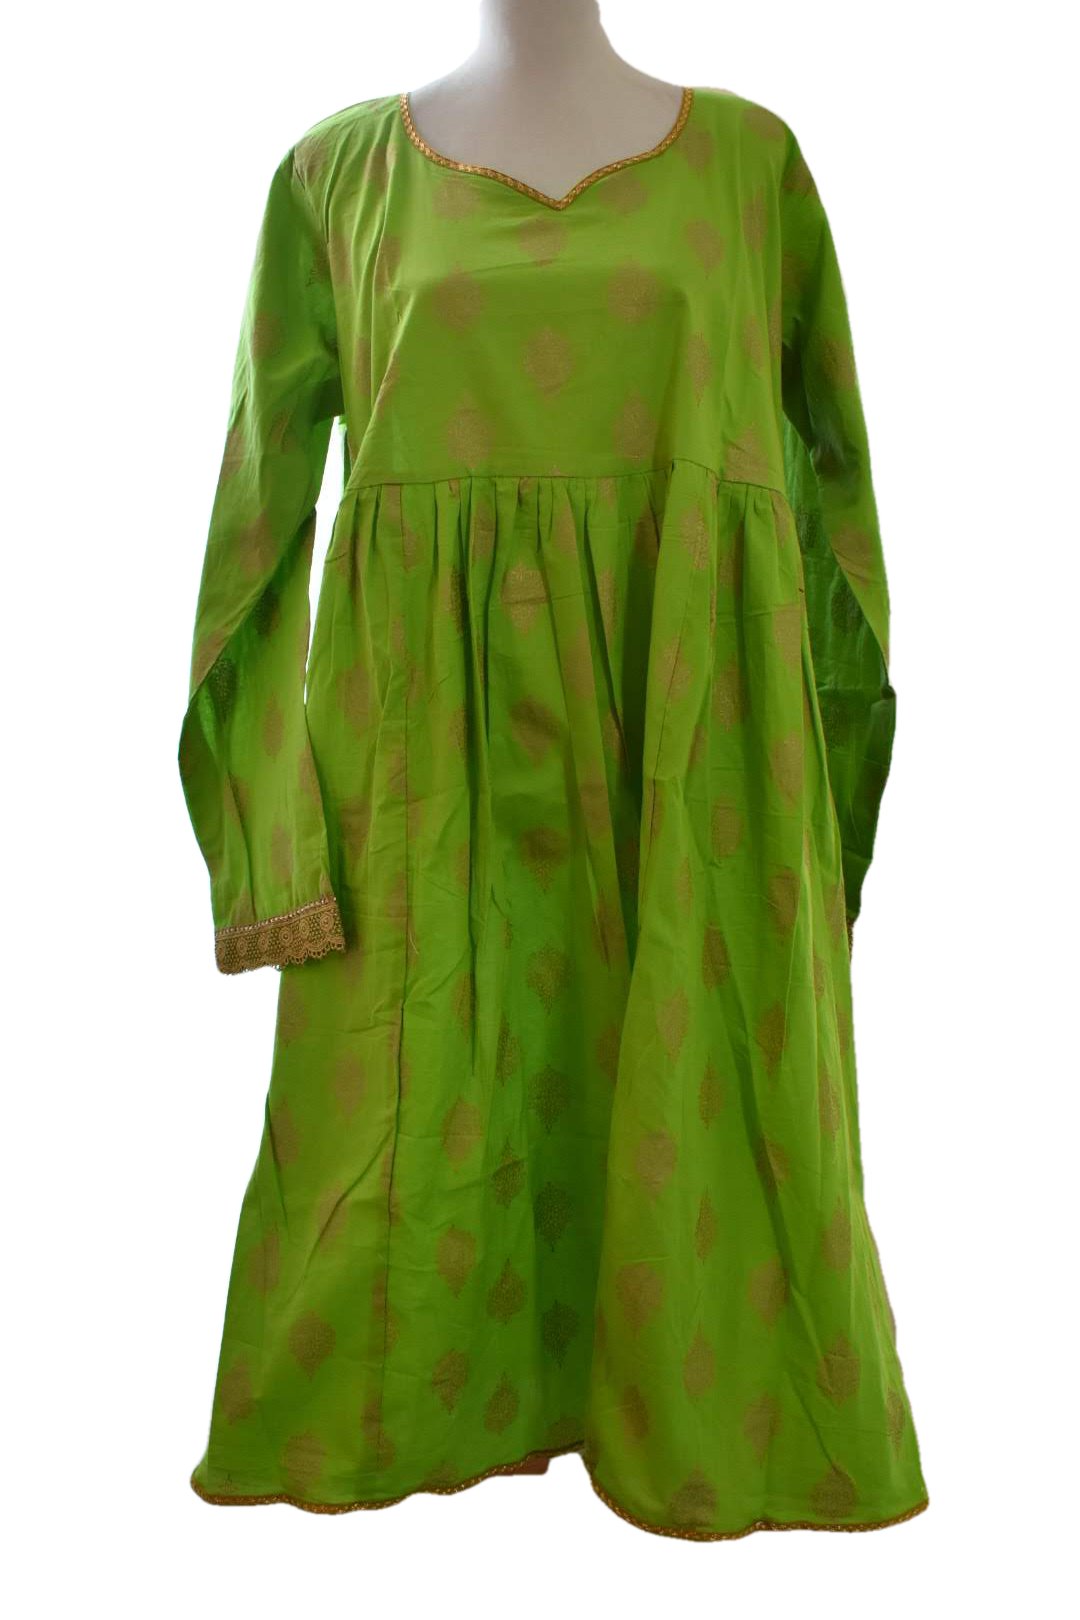 Leaf Green Color - Gold Block Emboss Print - Gold Zari Lace - Cotton Anarkali Kurti Kameez Set